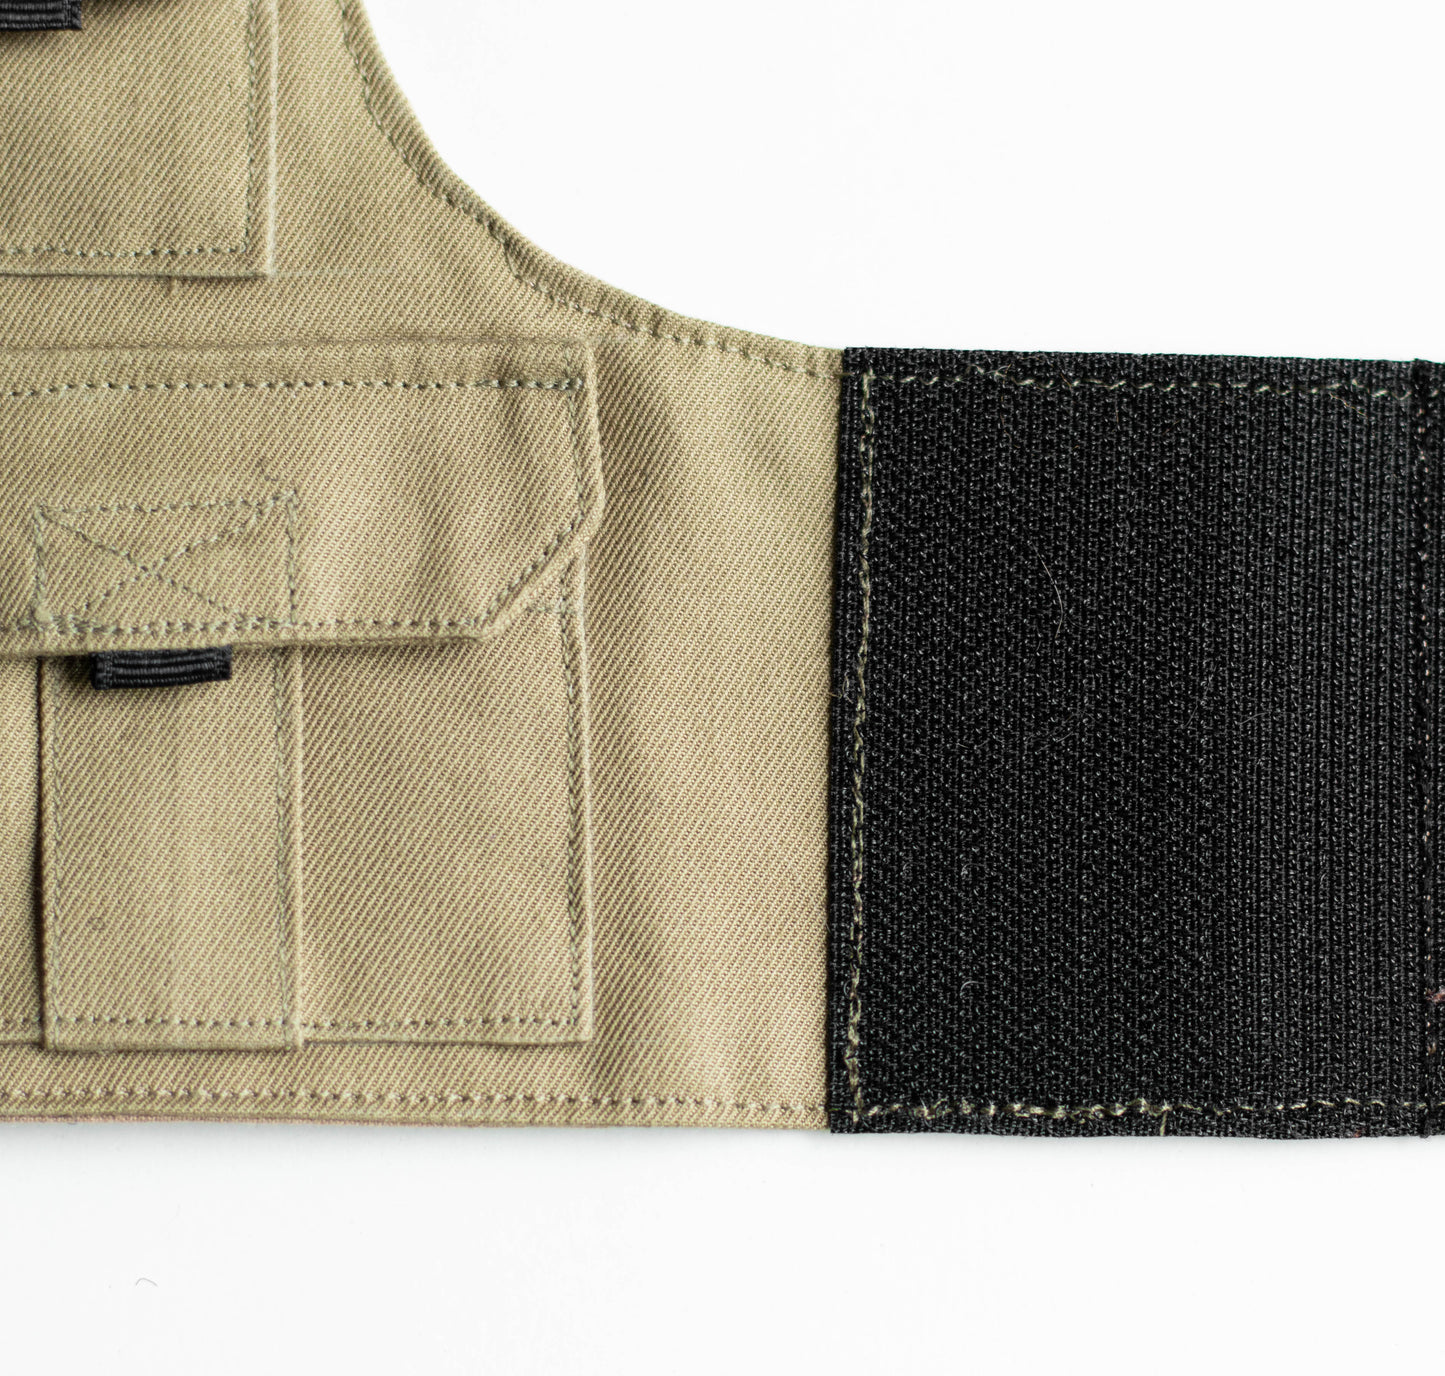 Light khaki Fishing vest. Custom-made Cotton Cat Harness with Pockets for GPS-tracker